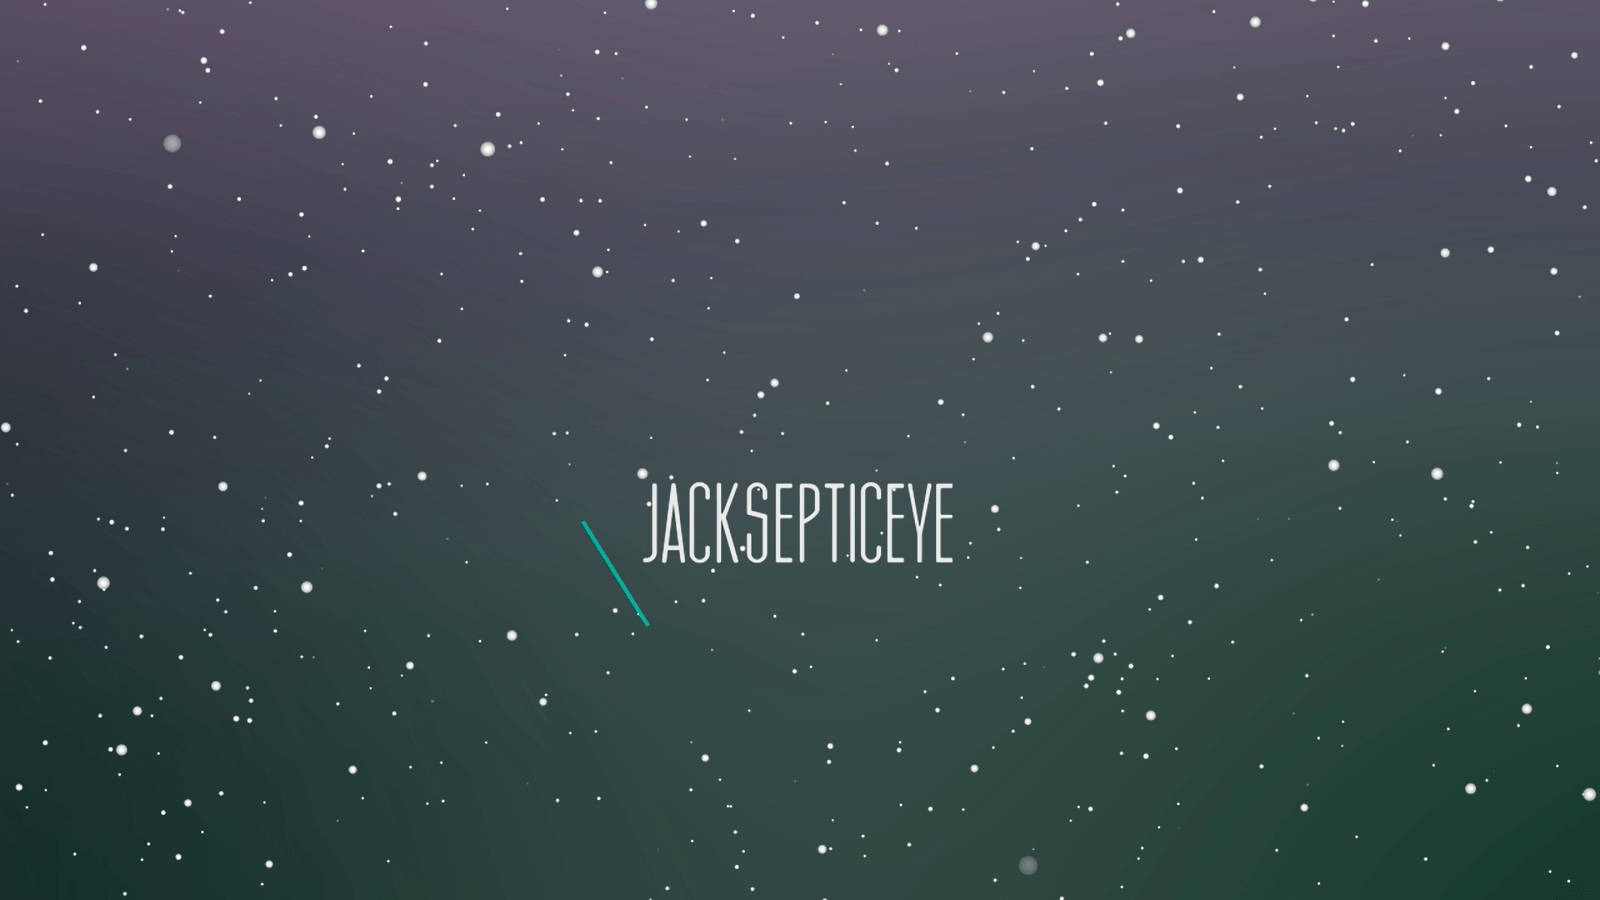 Jacksepticeye Night Sky Background